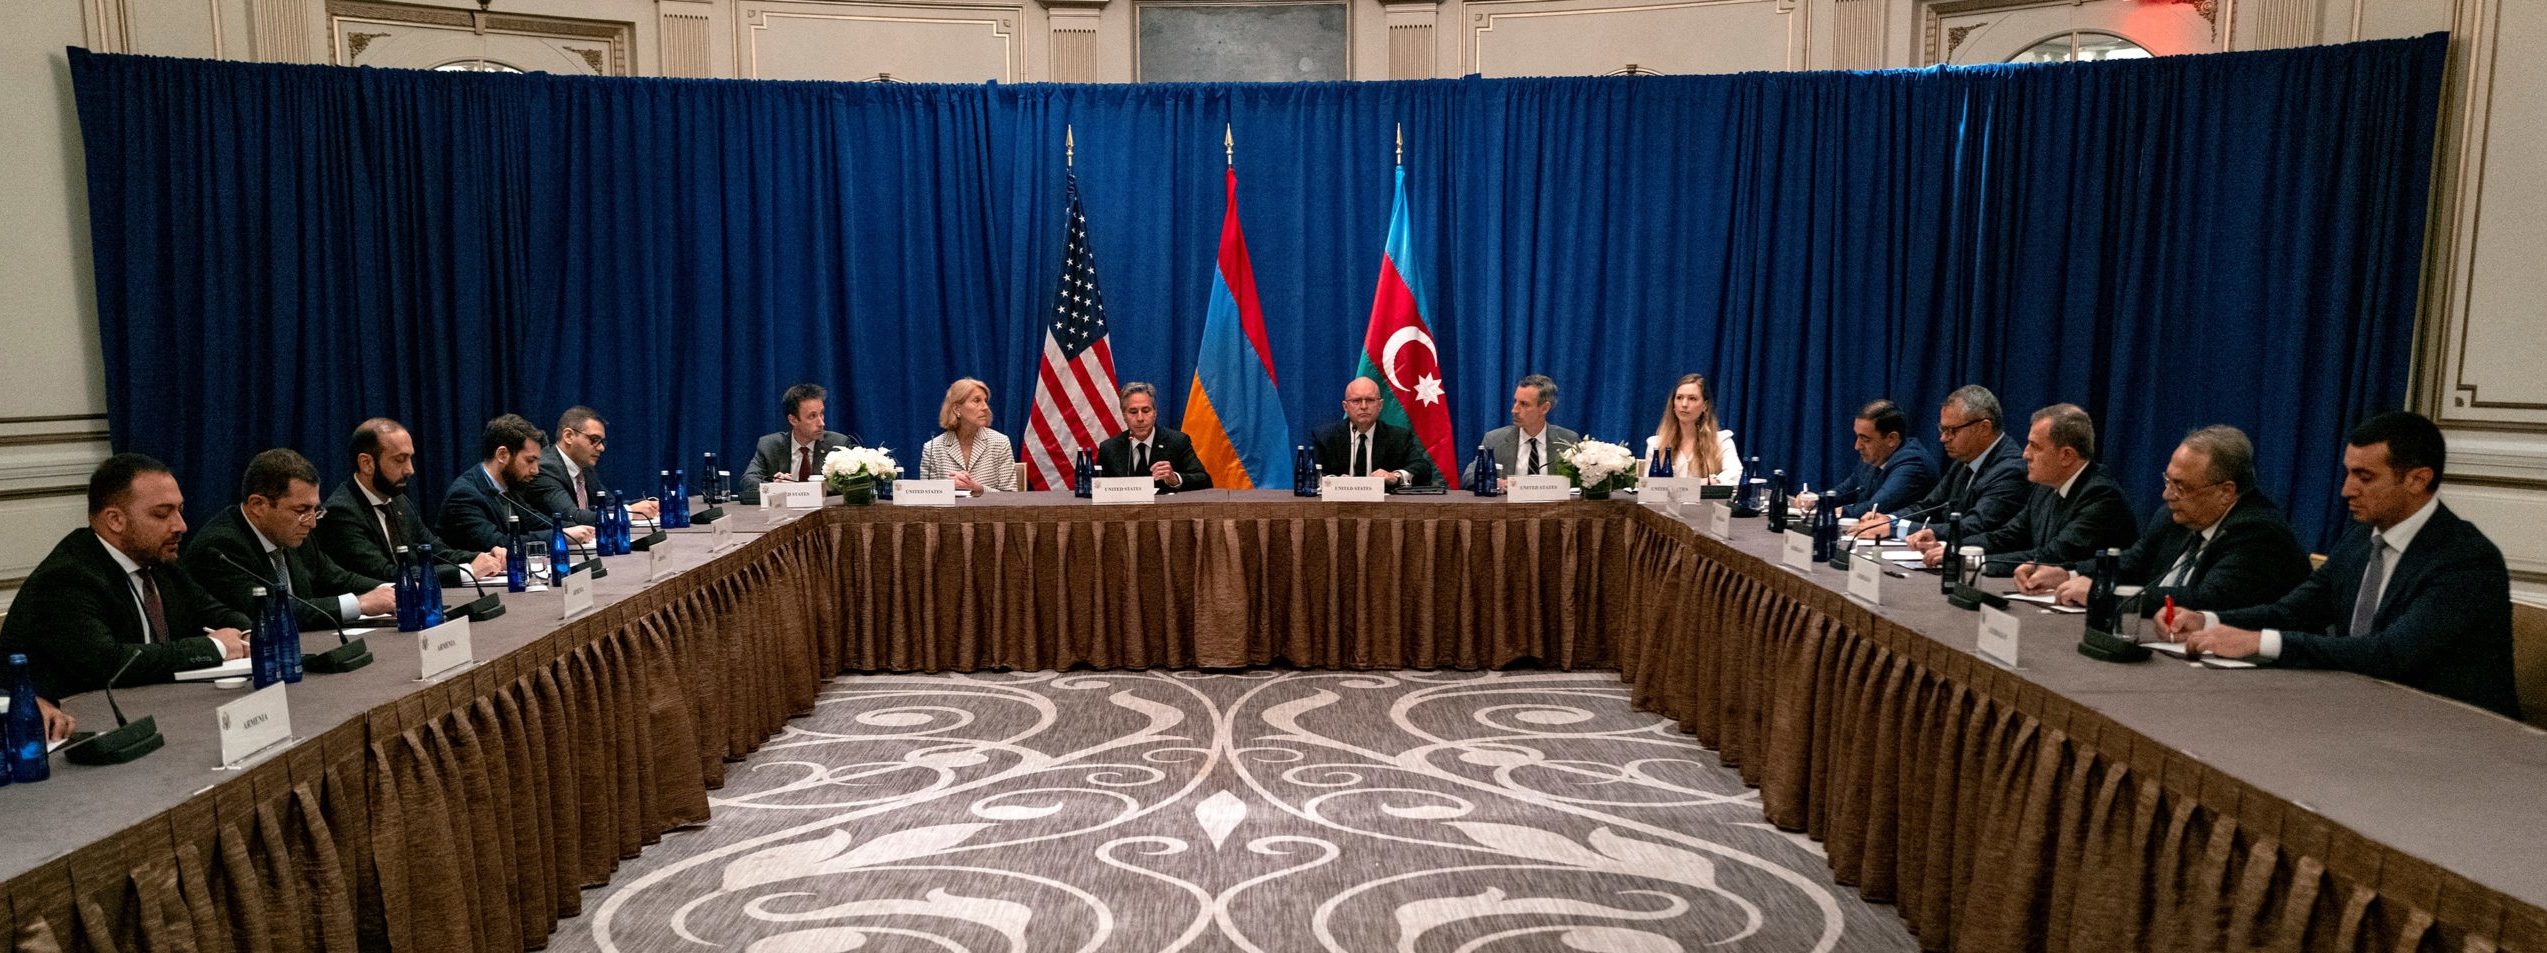 Pelosi's visit to staunch Russia ally Armenia: A risky trip